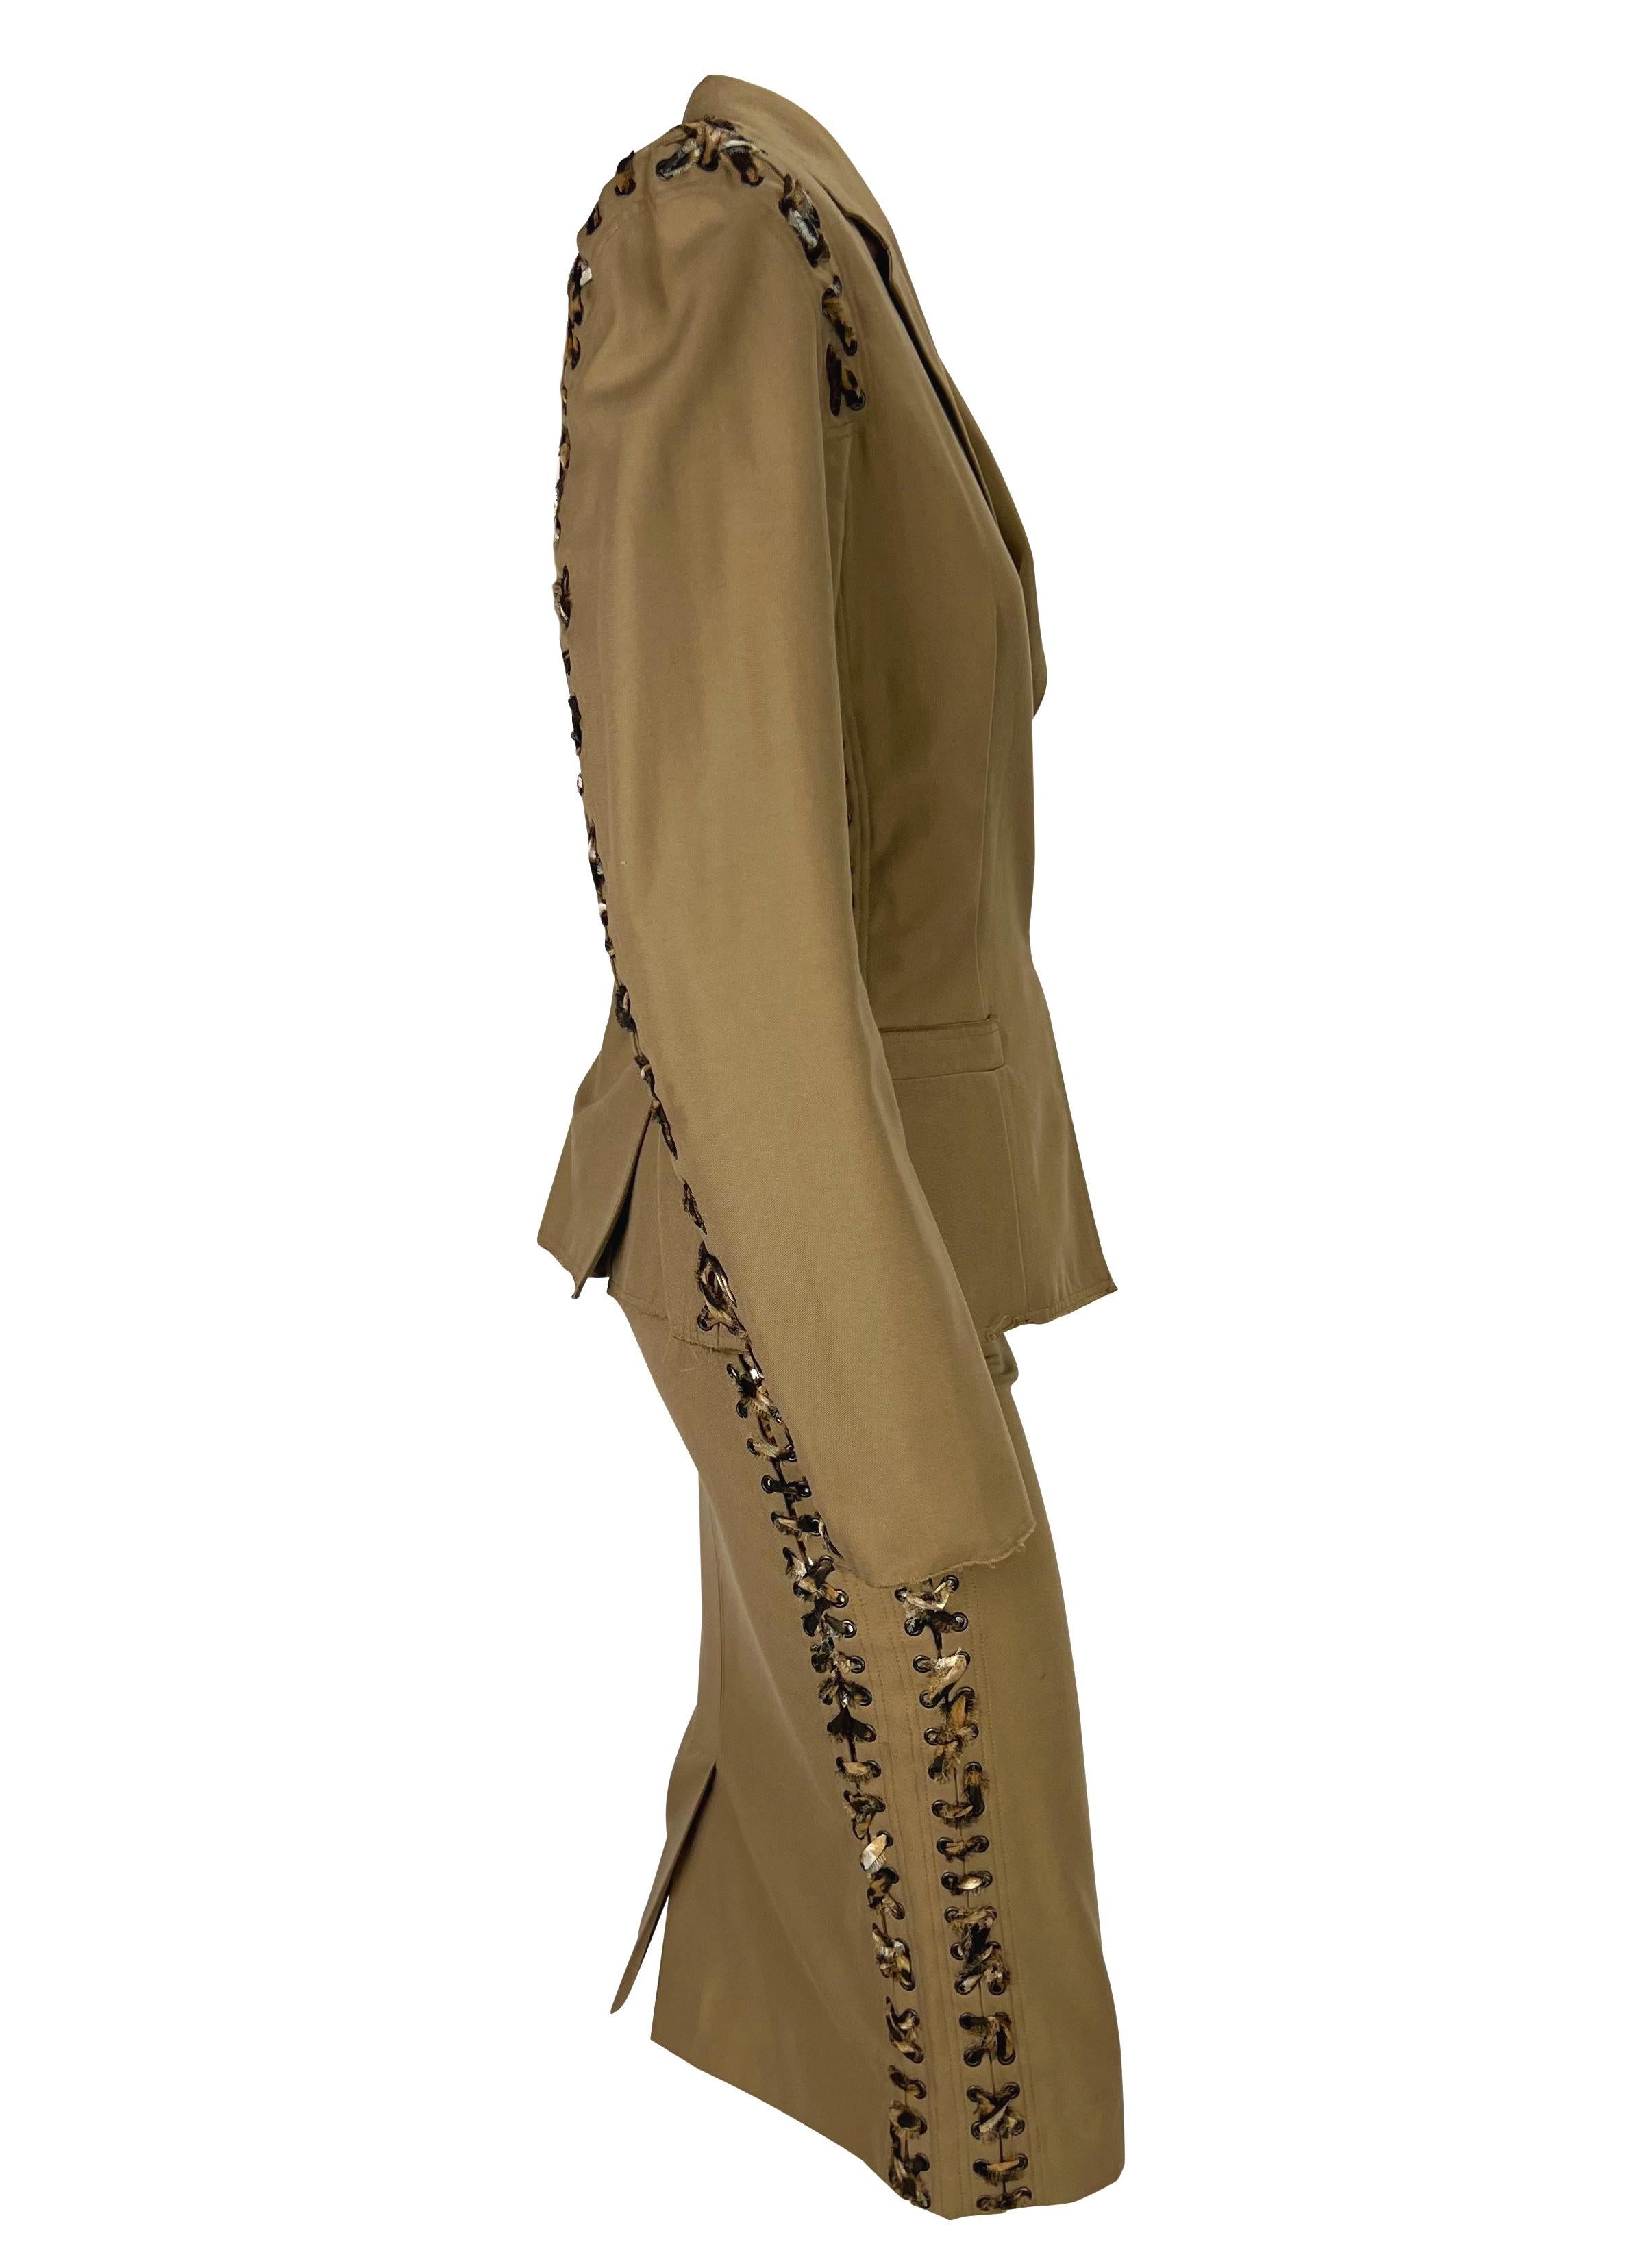 S/S 2002 Yves Saint Laurent by Tom Ford Safari Cheetah Print Lace-Up Khaki Suit For Sale 1